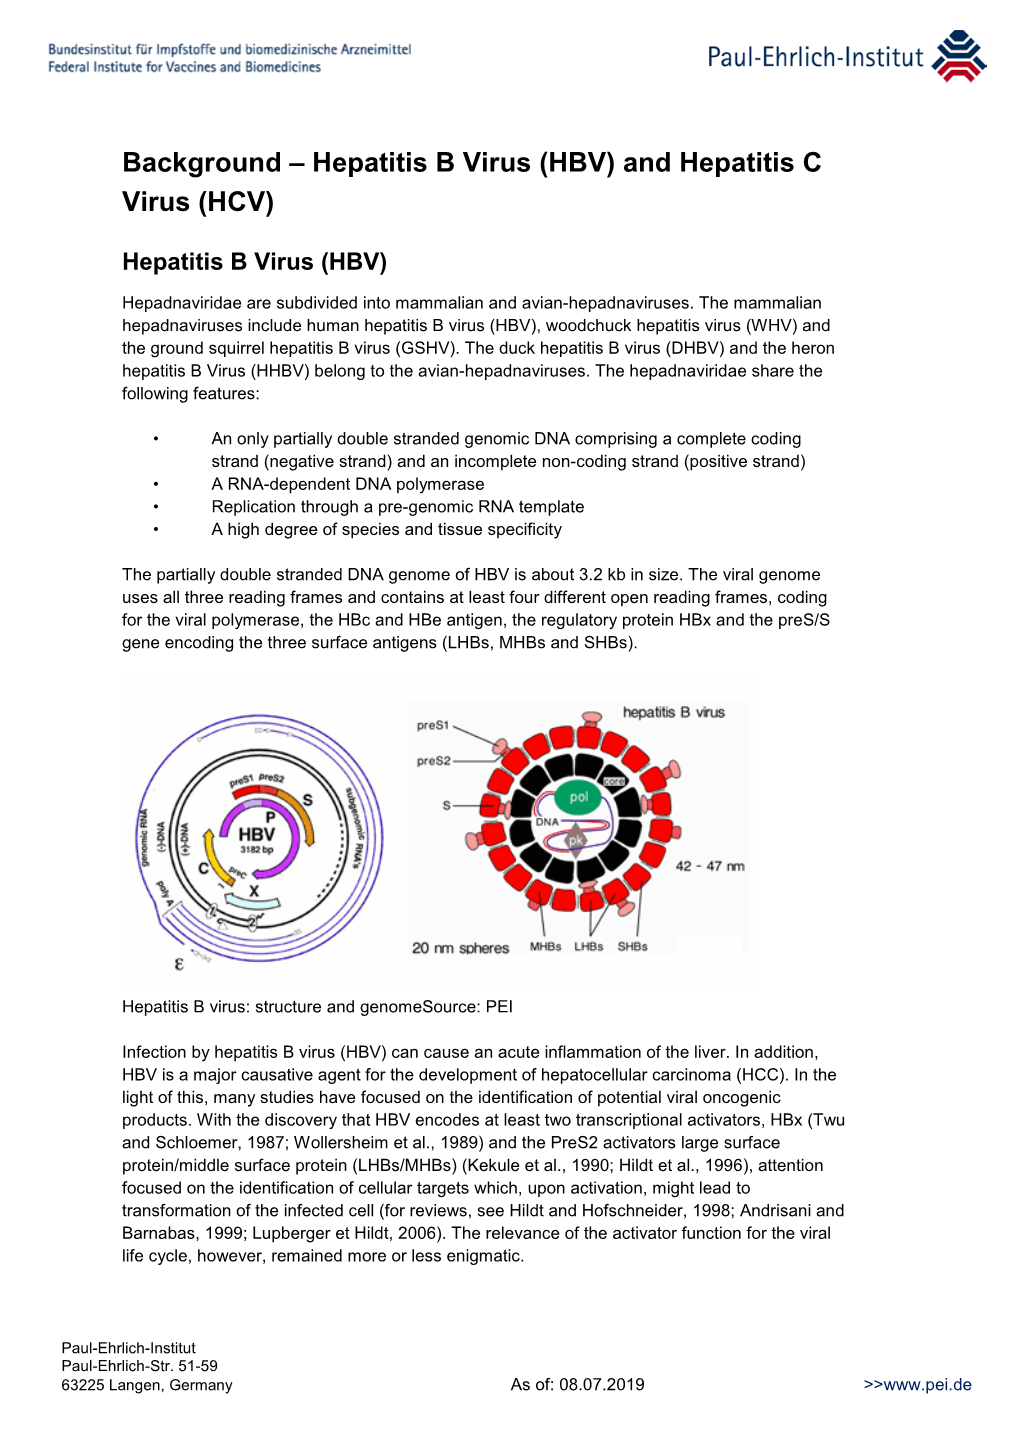 Background – Hepatitis B Virus (HBV) and Hepatitis C Virus (HCV)